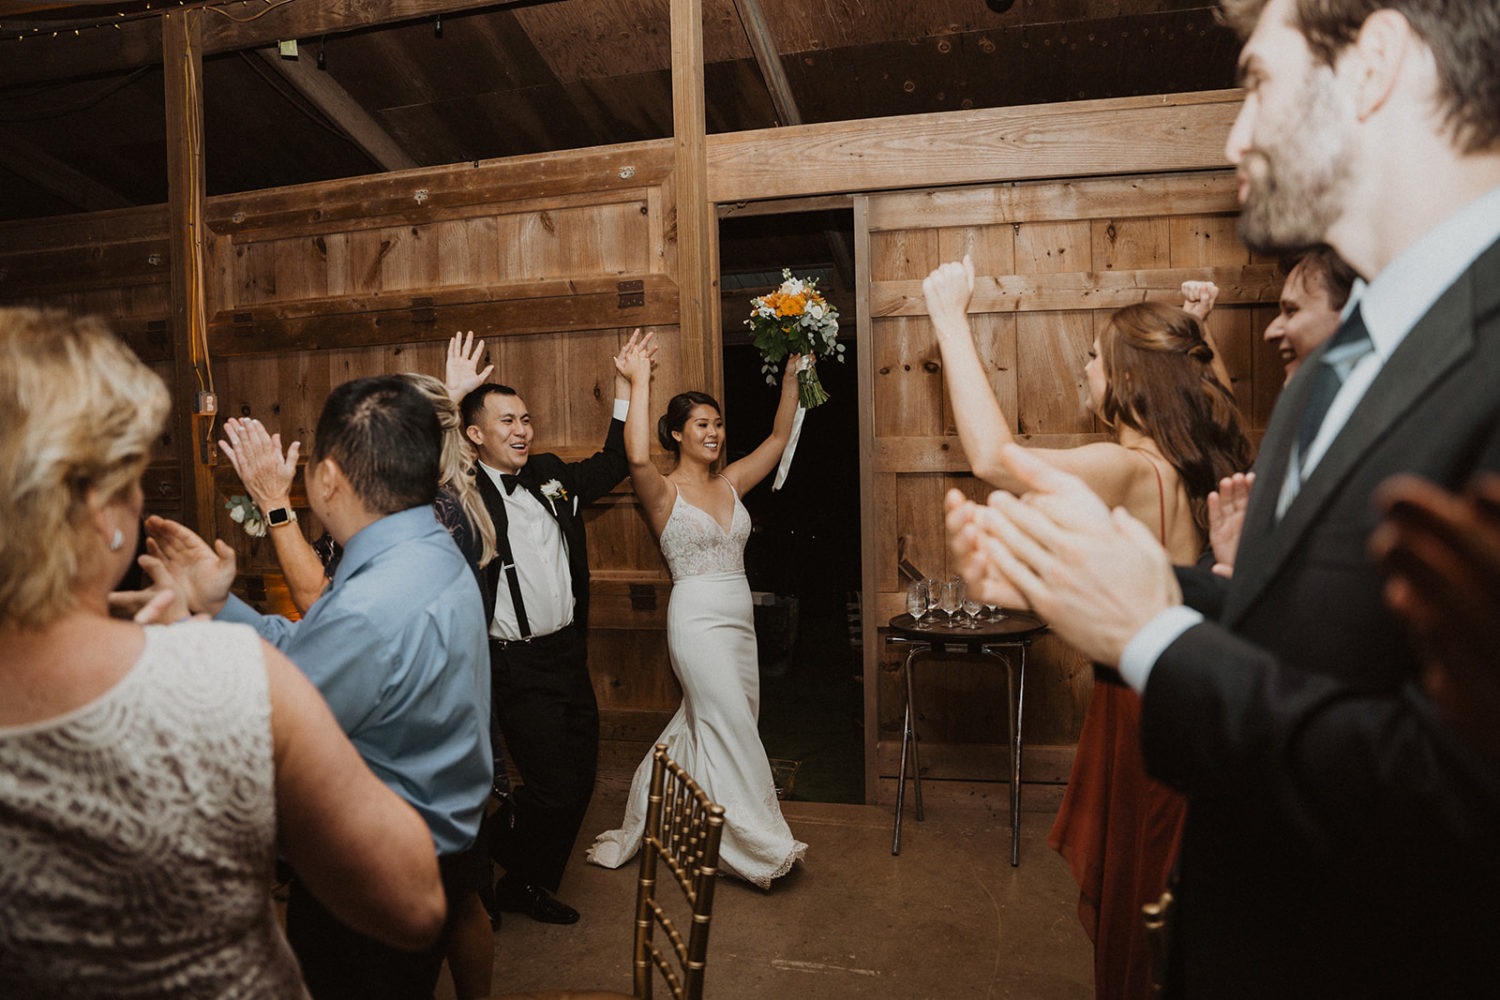 Couple enters reception at barn wedding